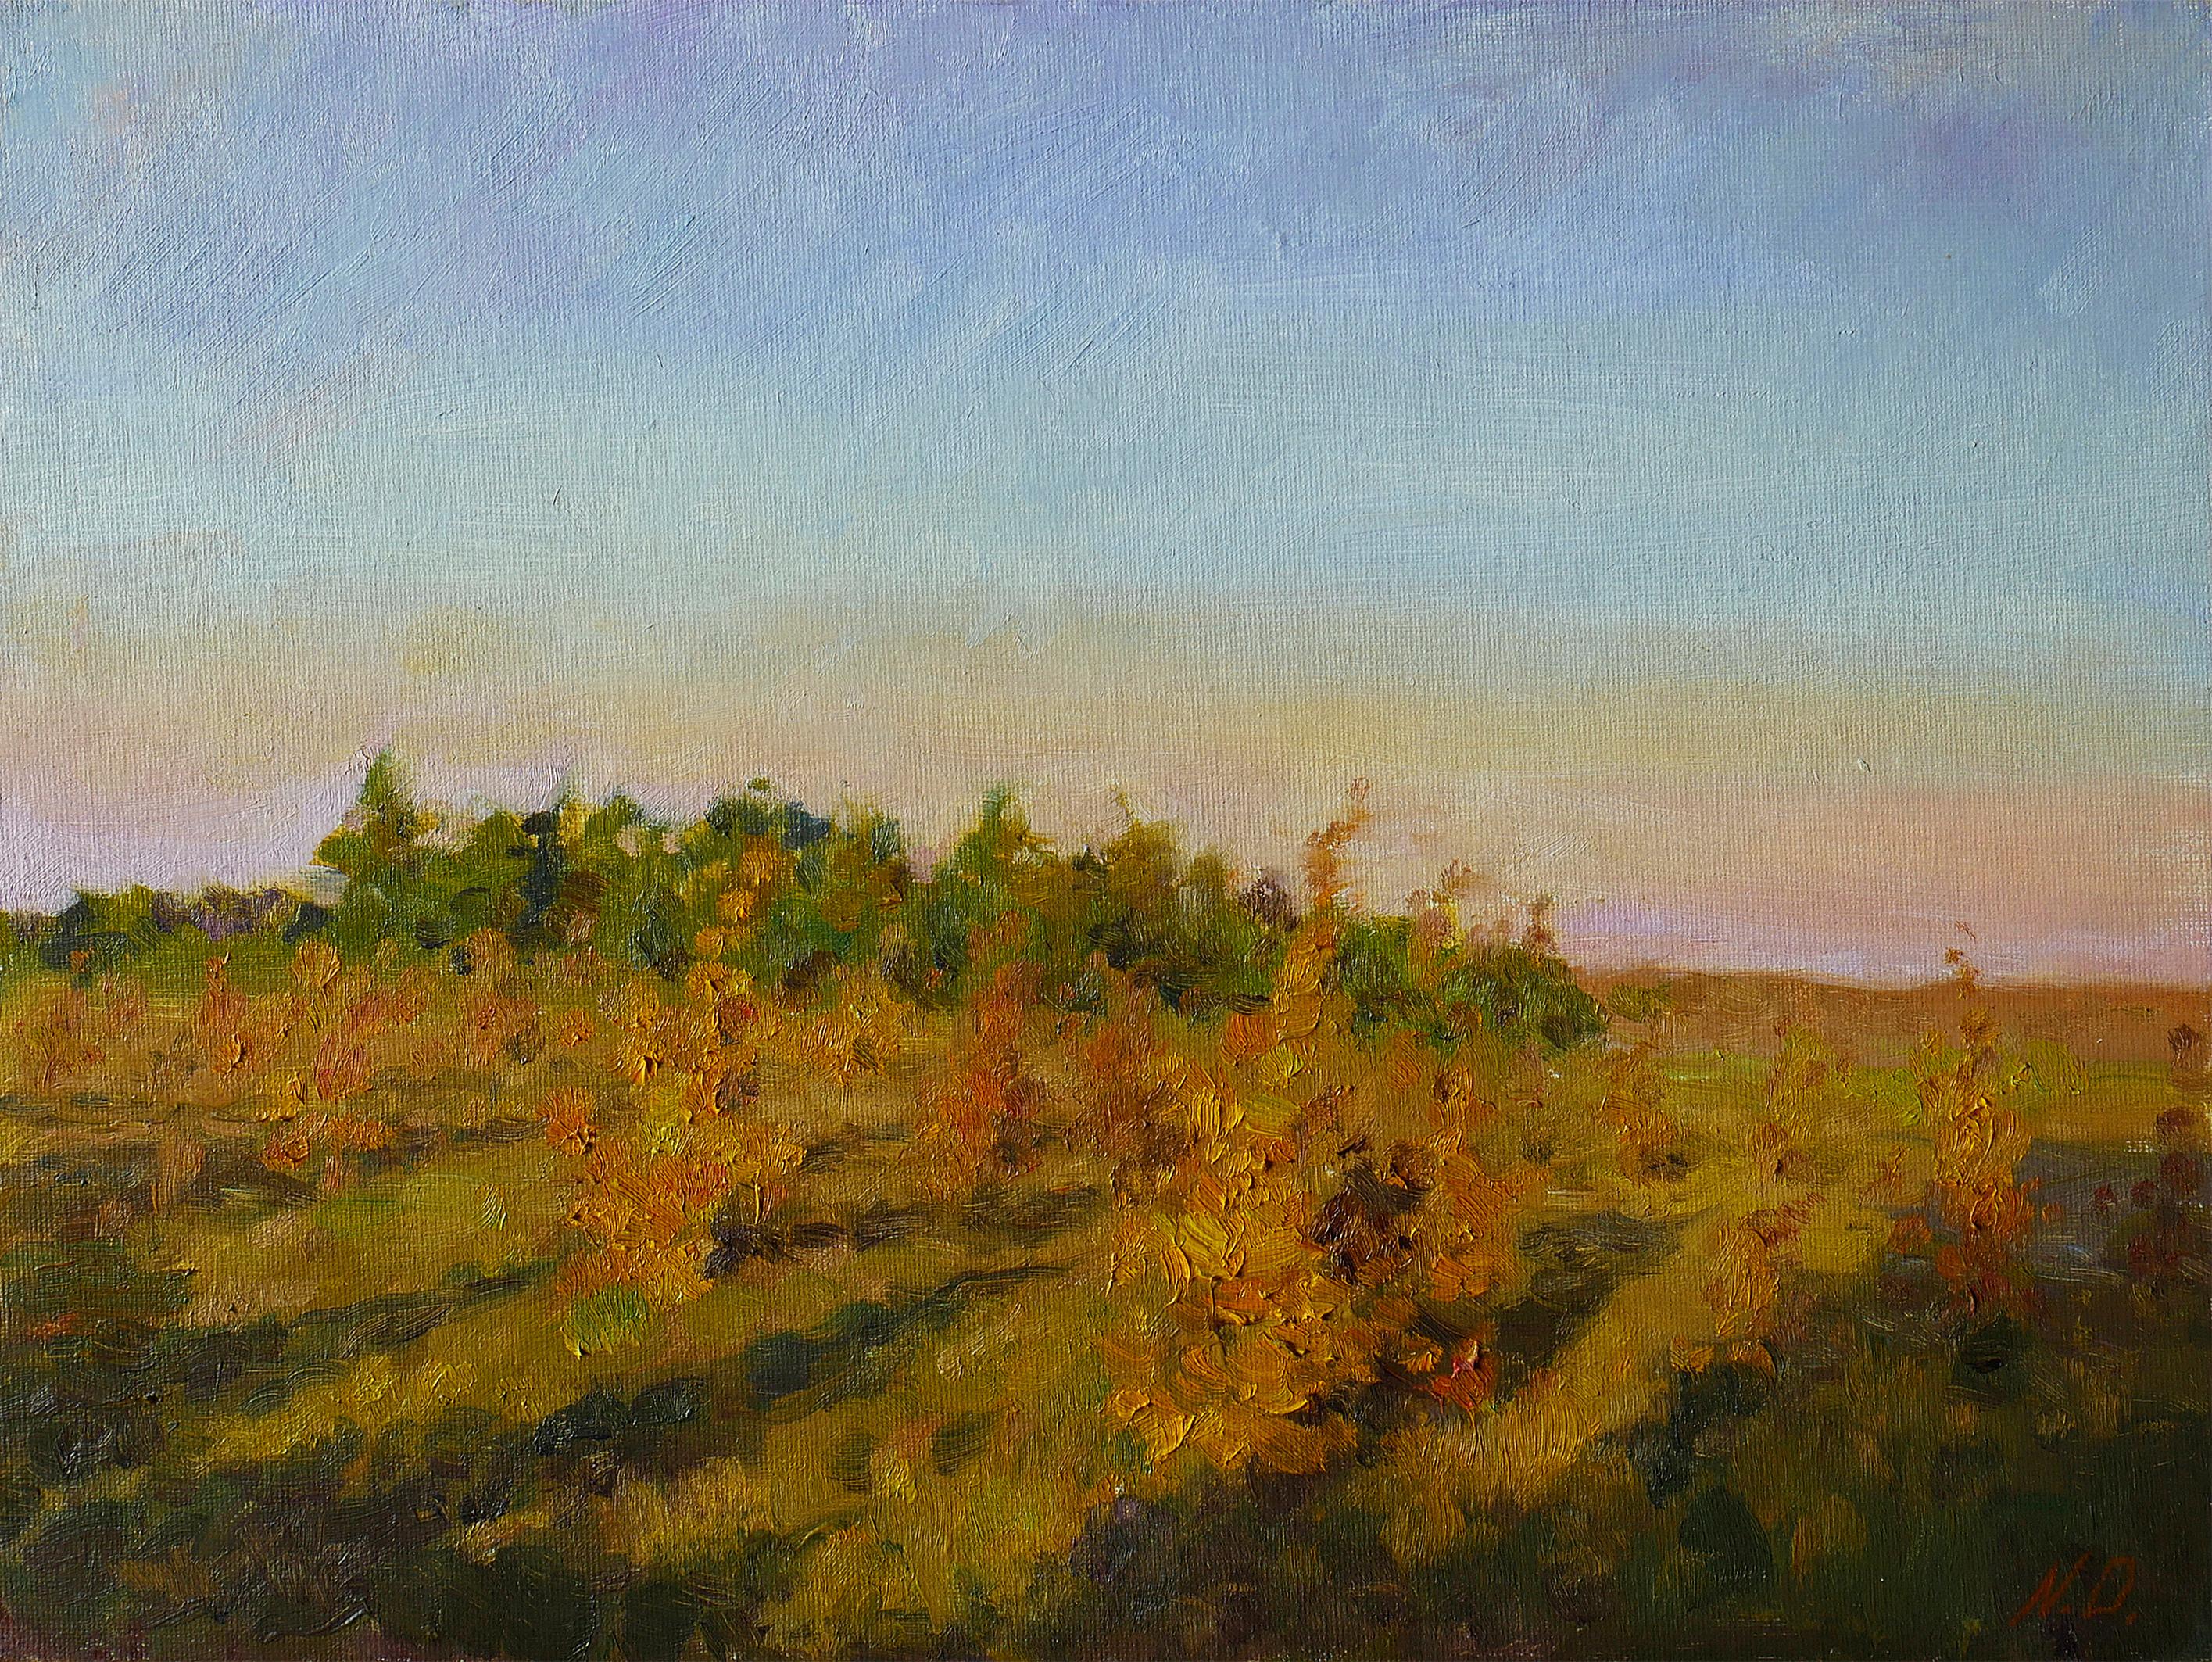 The Autumn Sunset - sunset landscape painting